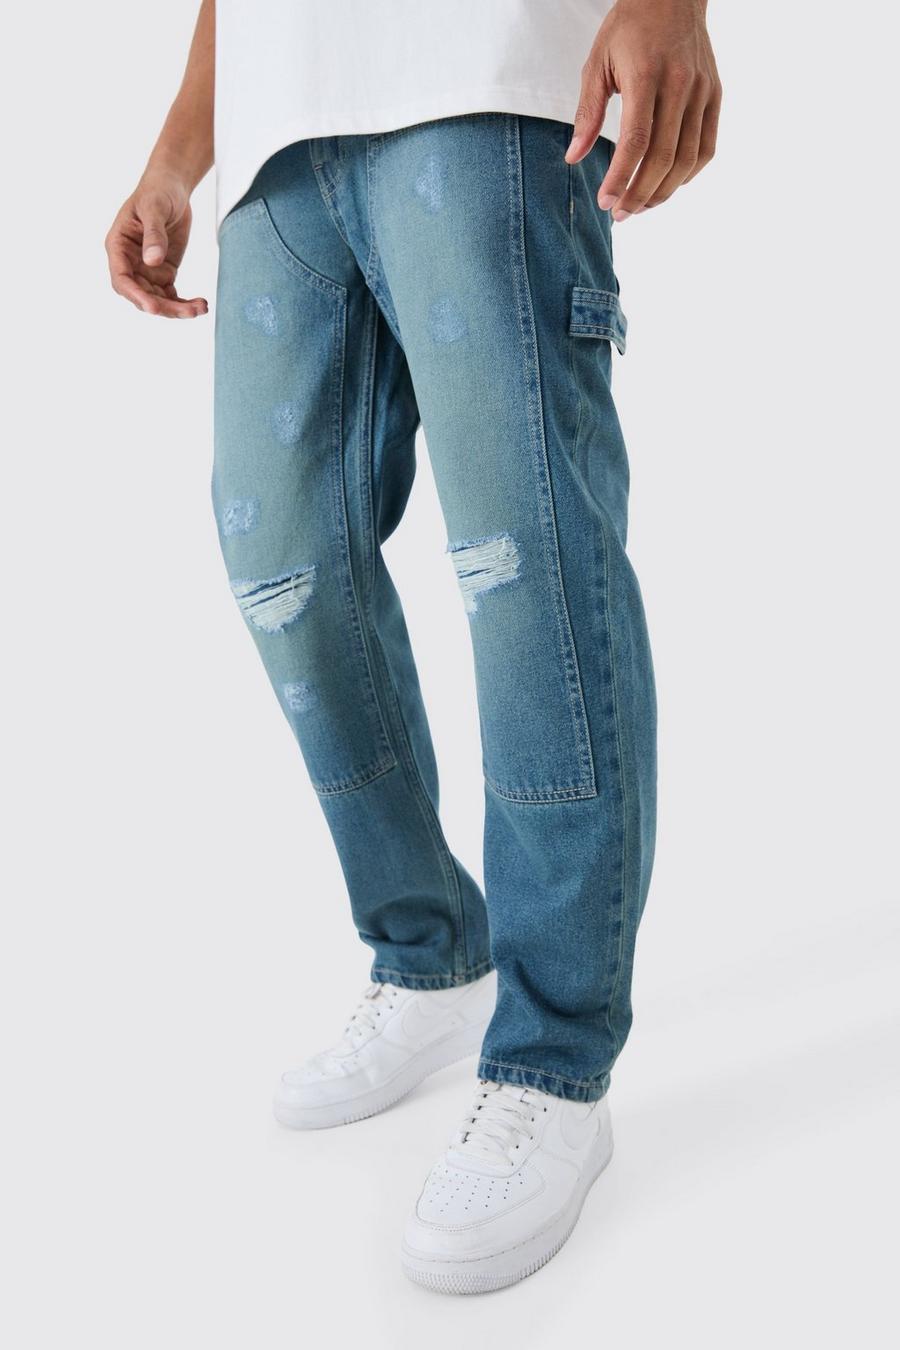 Lockere Jeans in Hellblau mit Riss am Knie, Light blue